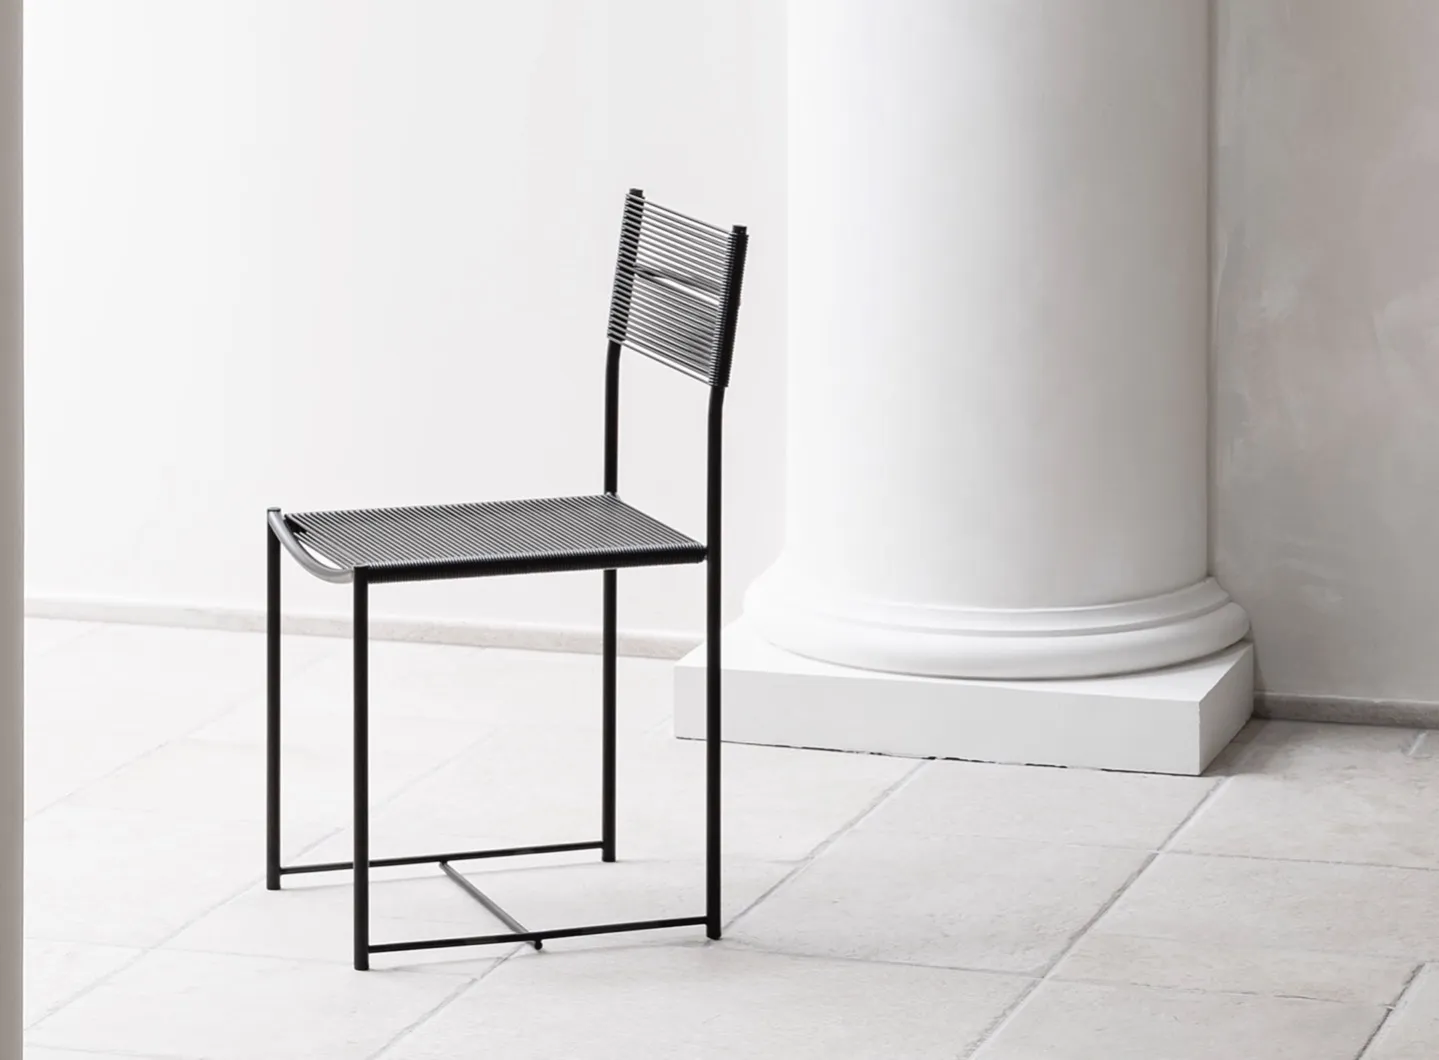 Alias - Spaghetti chair designed by Giandomenico Belotti